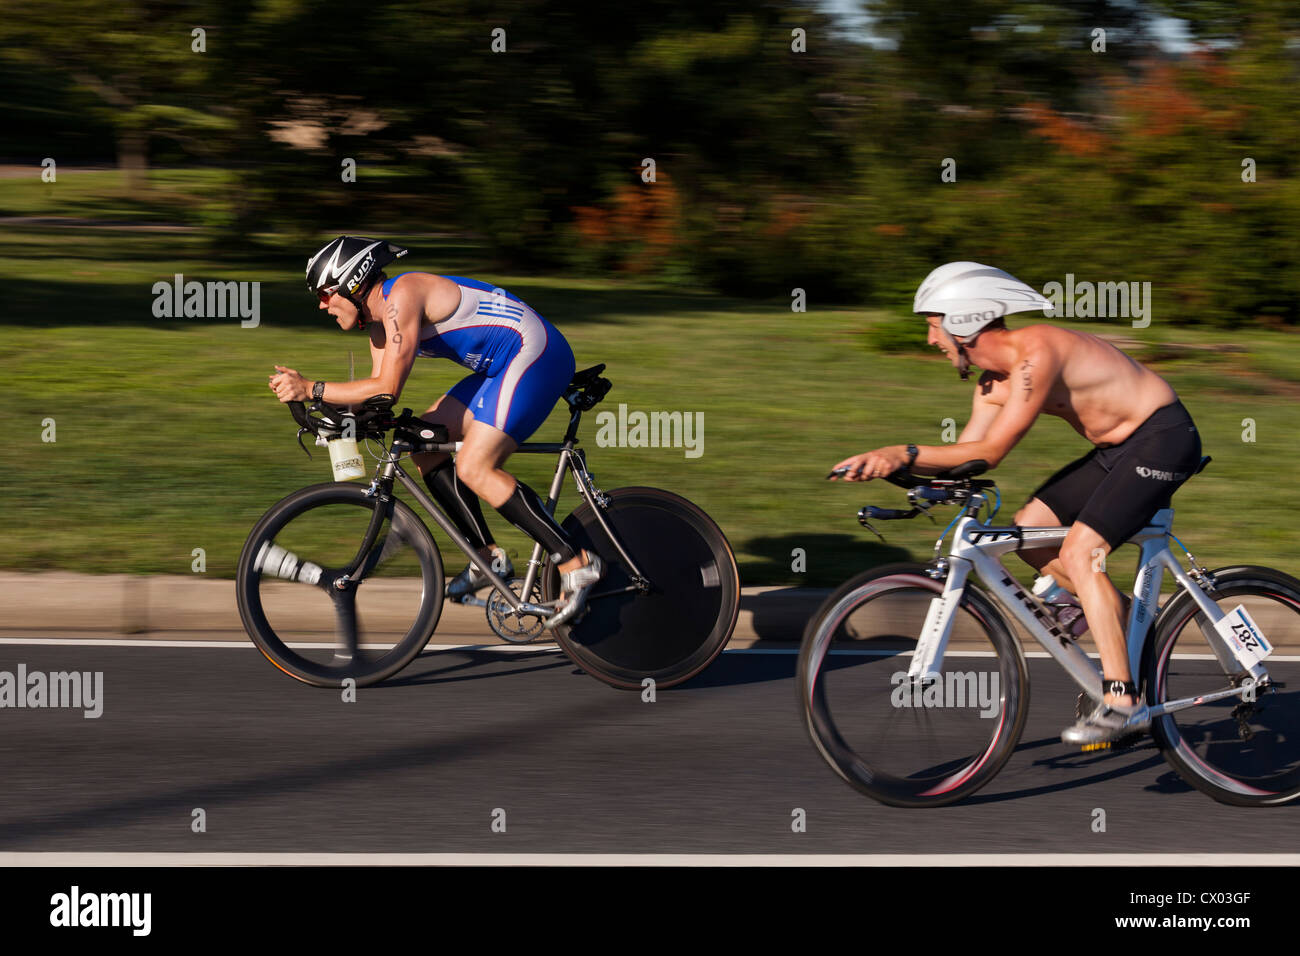 Cyclists racing in bike race - Washington DC, USA Stock Photo